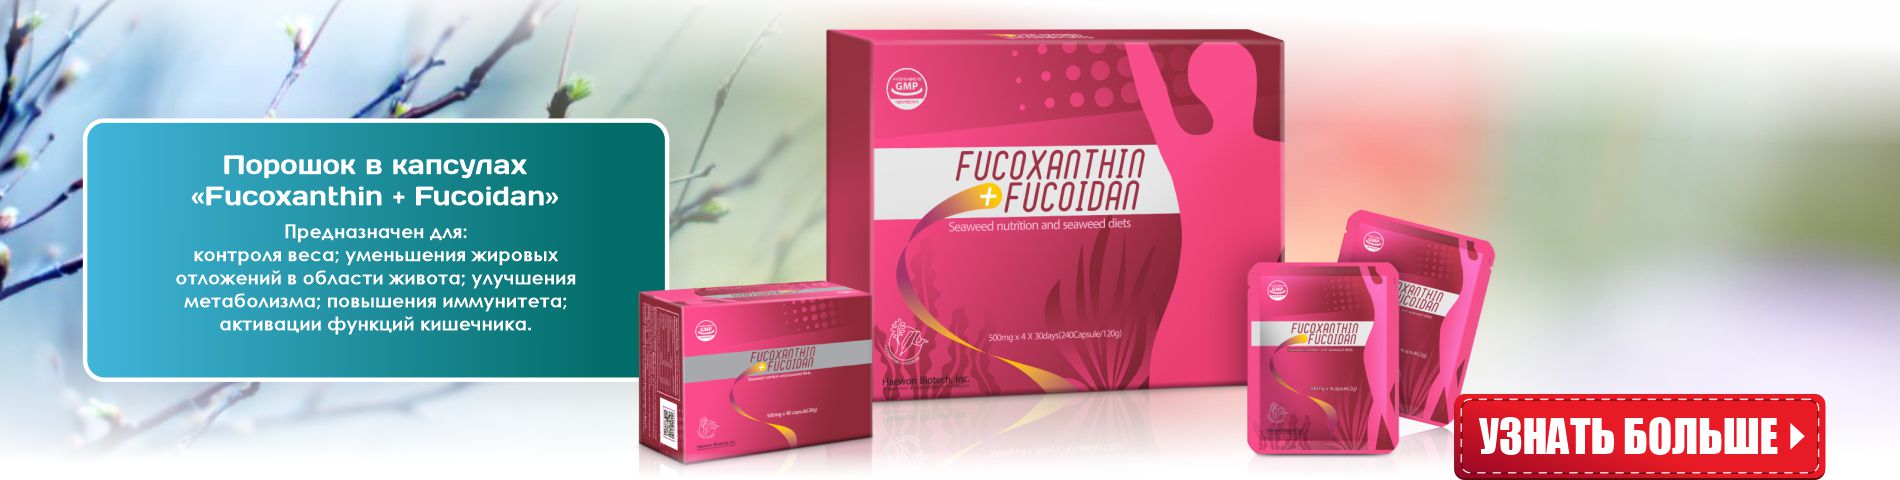 Продукт с фукоиданом и фукоксантином Fucoxanthin + Fucoidan